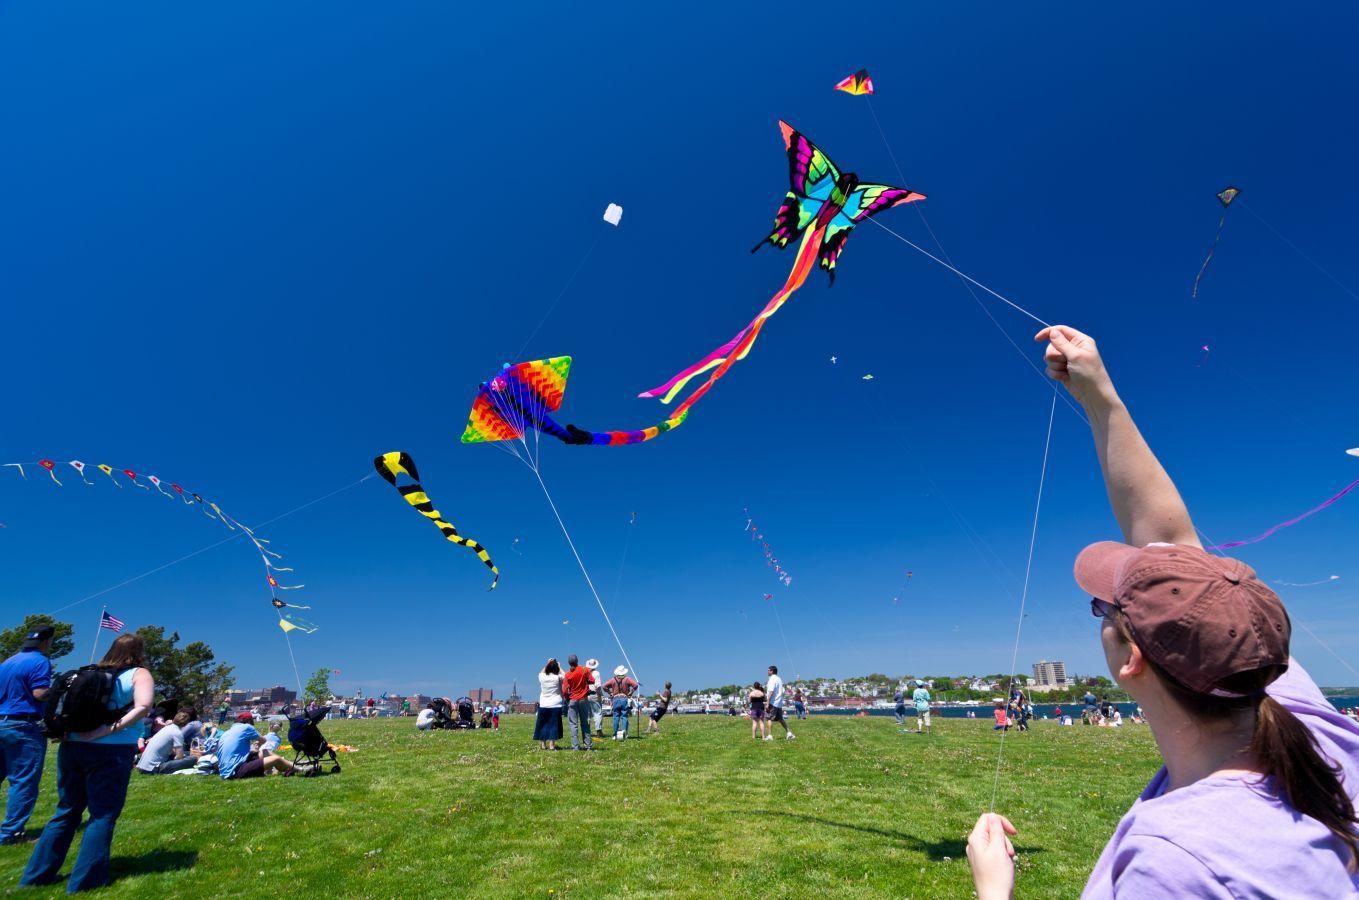 Kite Flying wallpaper with HD Quality. #kiteFlying #kiteHD #kite #hd